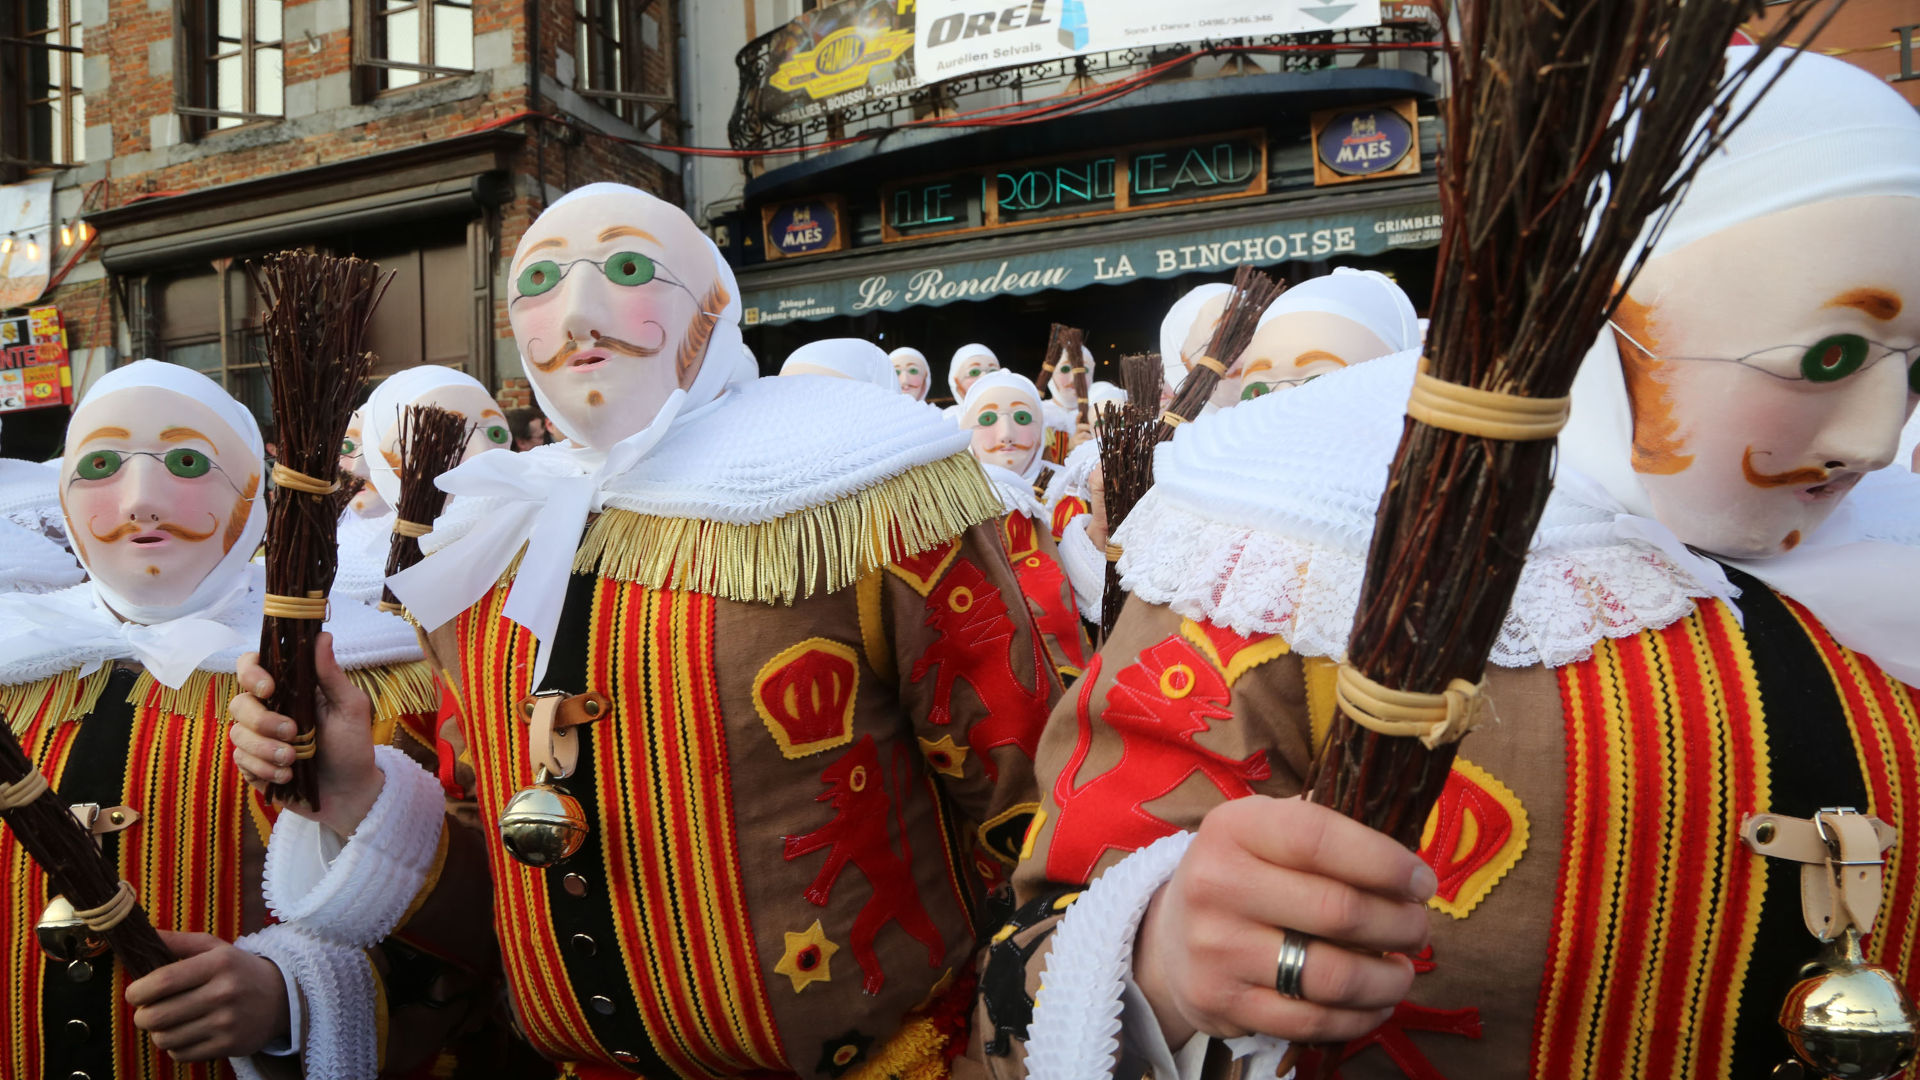 Carnaval de Mardi gras